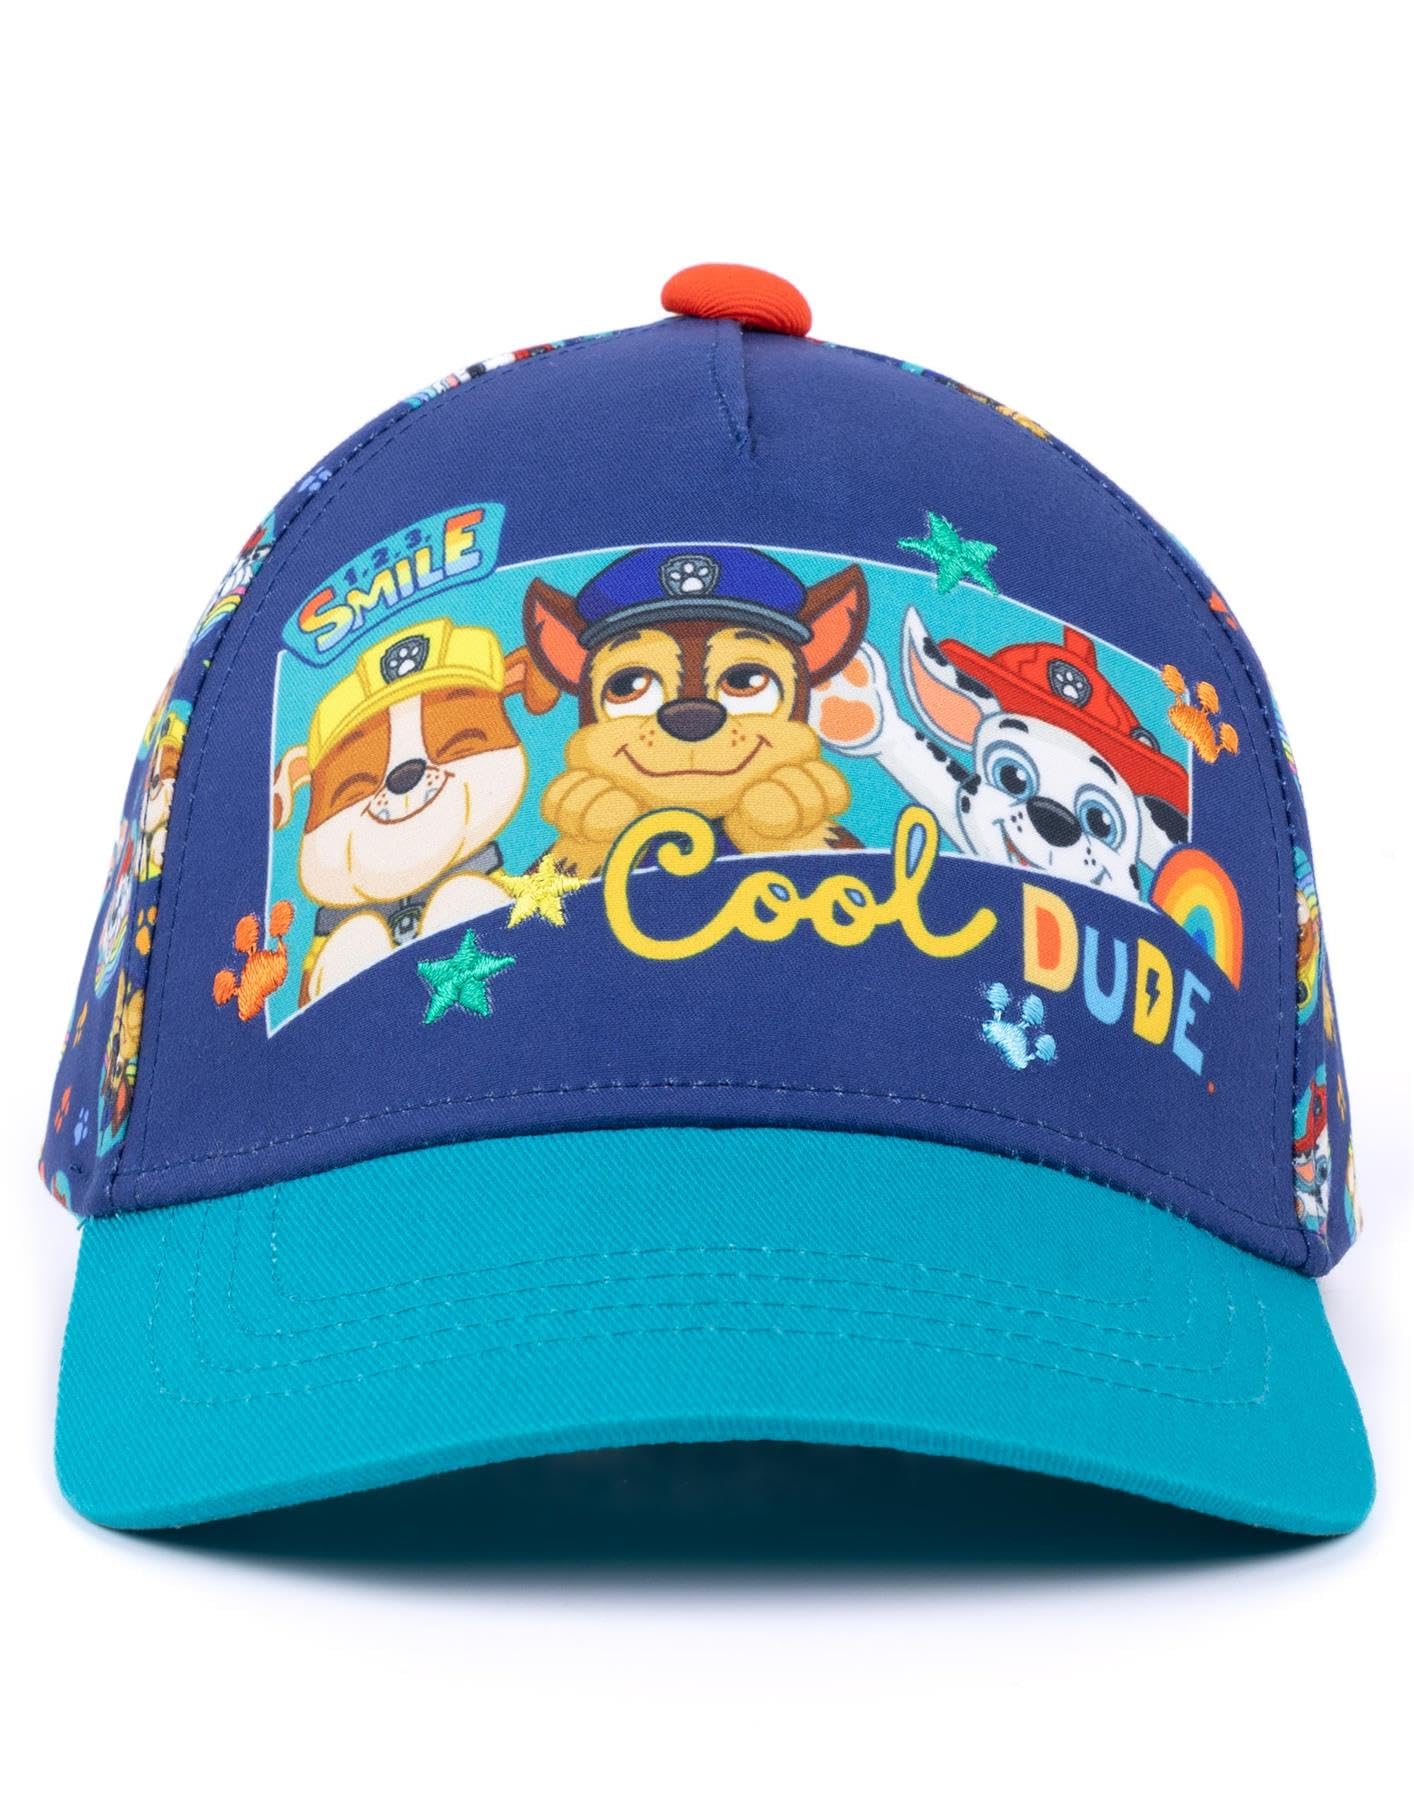 Paw Patrol Boys Snapback Cap & Sunglasses | Rubble Chase Marshall Cool Dude Blue Summer Hat & Shades | Adjustable Headwear